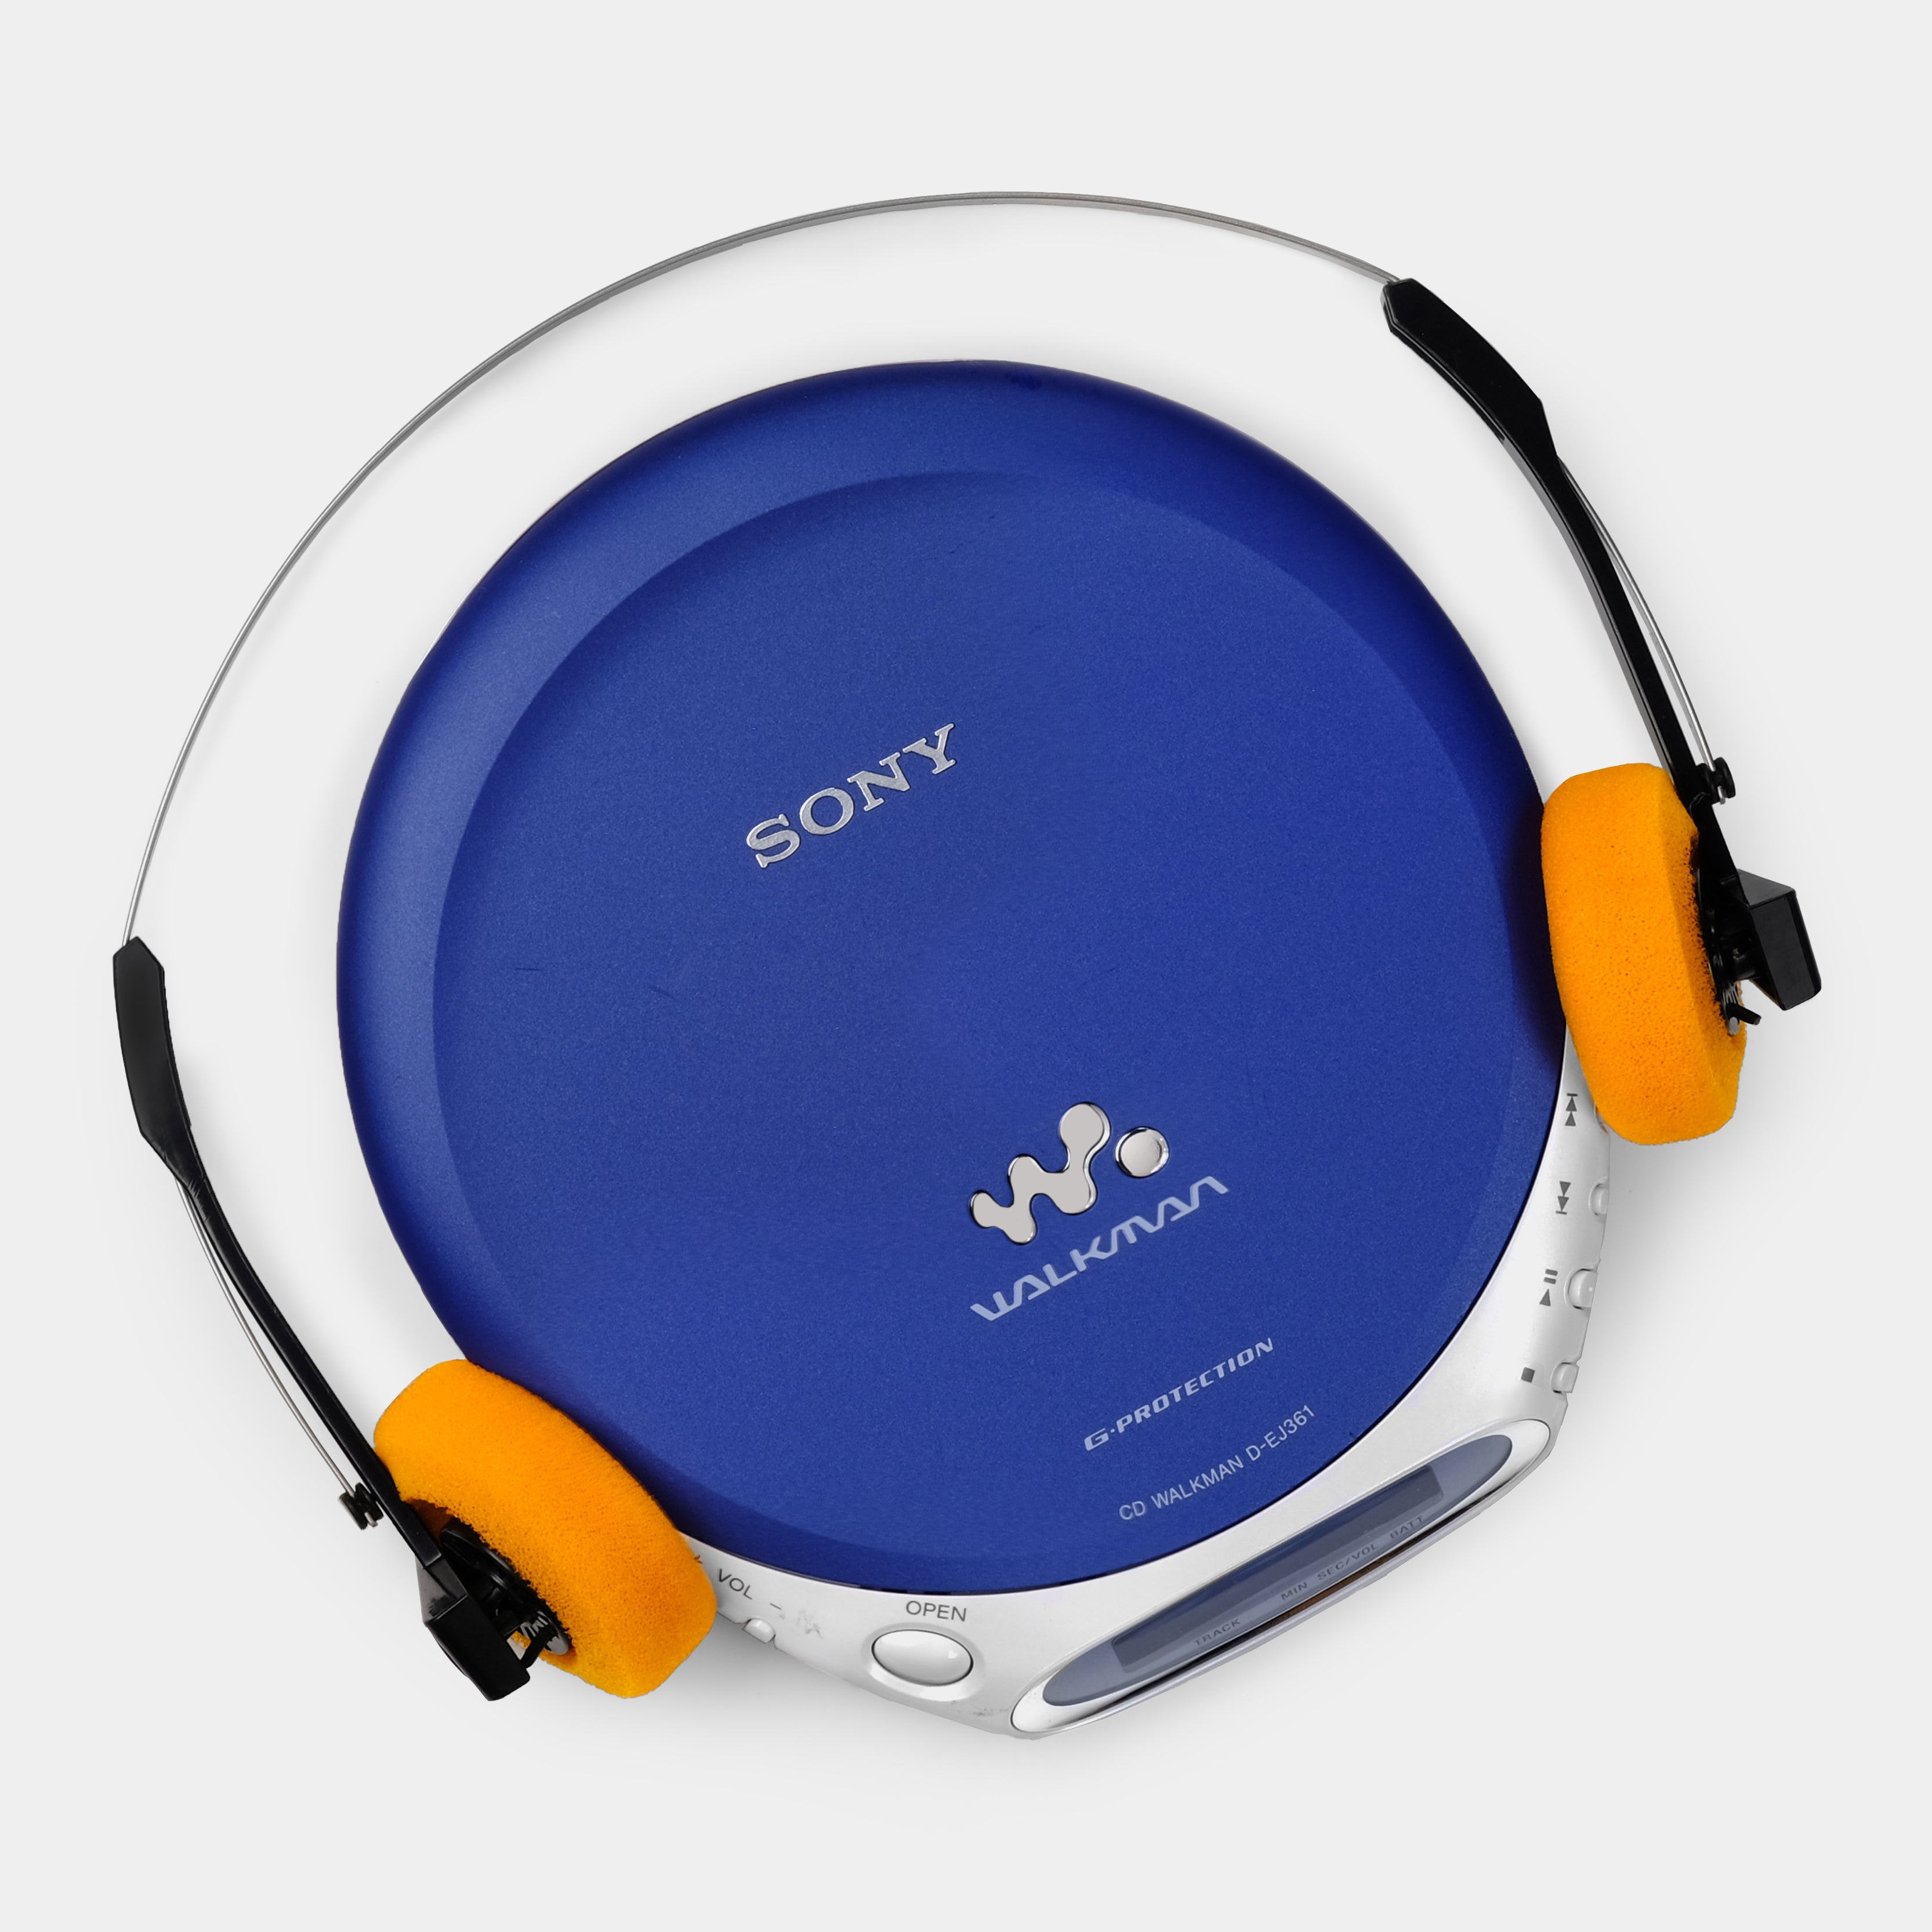 Sony Walkman D-EJ361 Portable CD Player